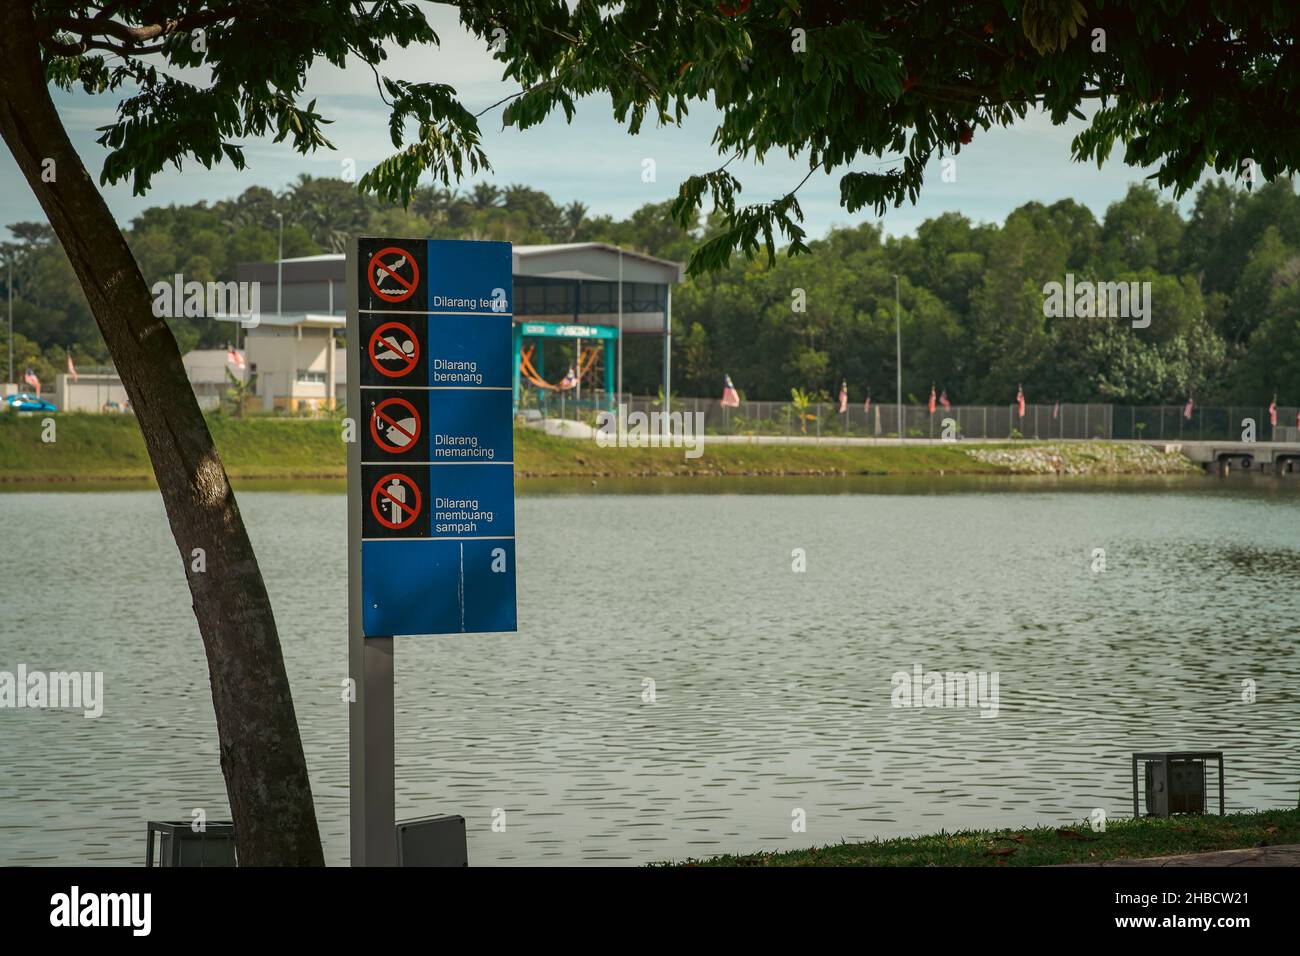 No swimming, no fishing, don't litter and no diving signboard near the lake written in Malaysian language. Stock Photo